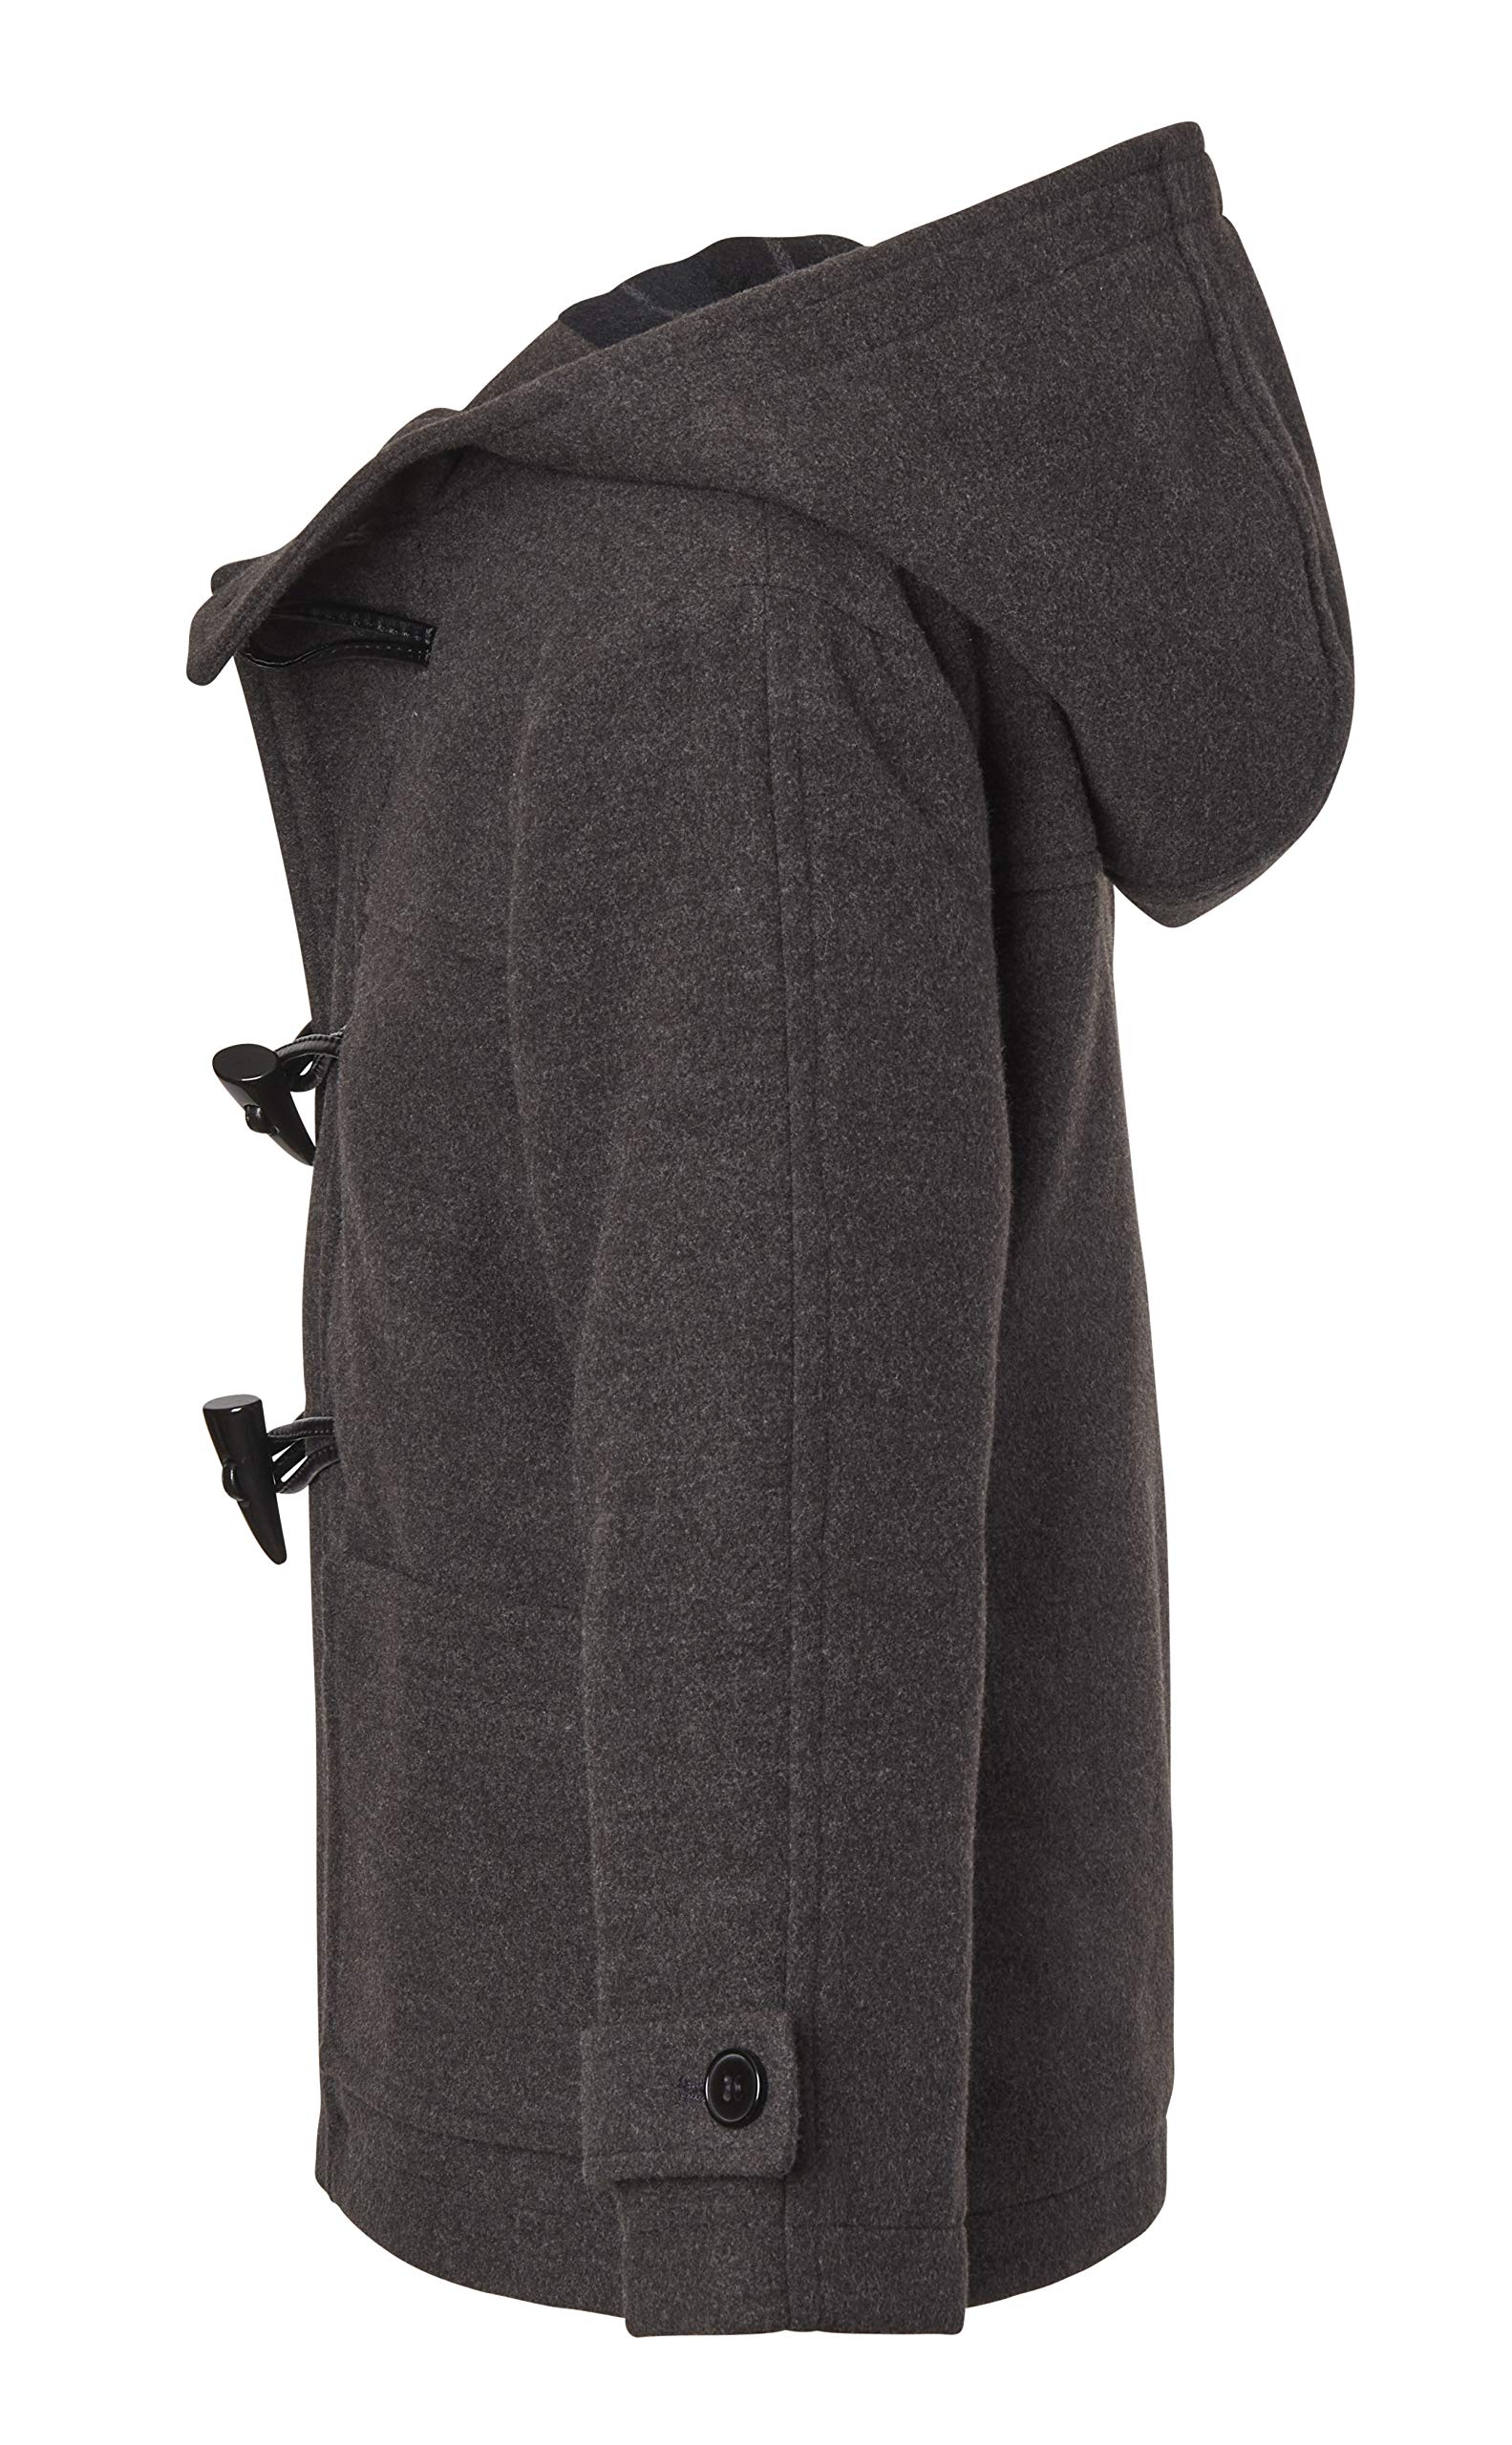 Cremson Boys Classic Wool Look Winter Duffle Toggle Jacket Dress Coat Scarf Hood